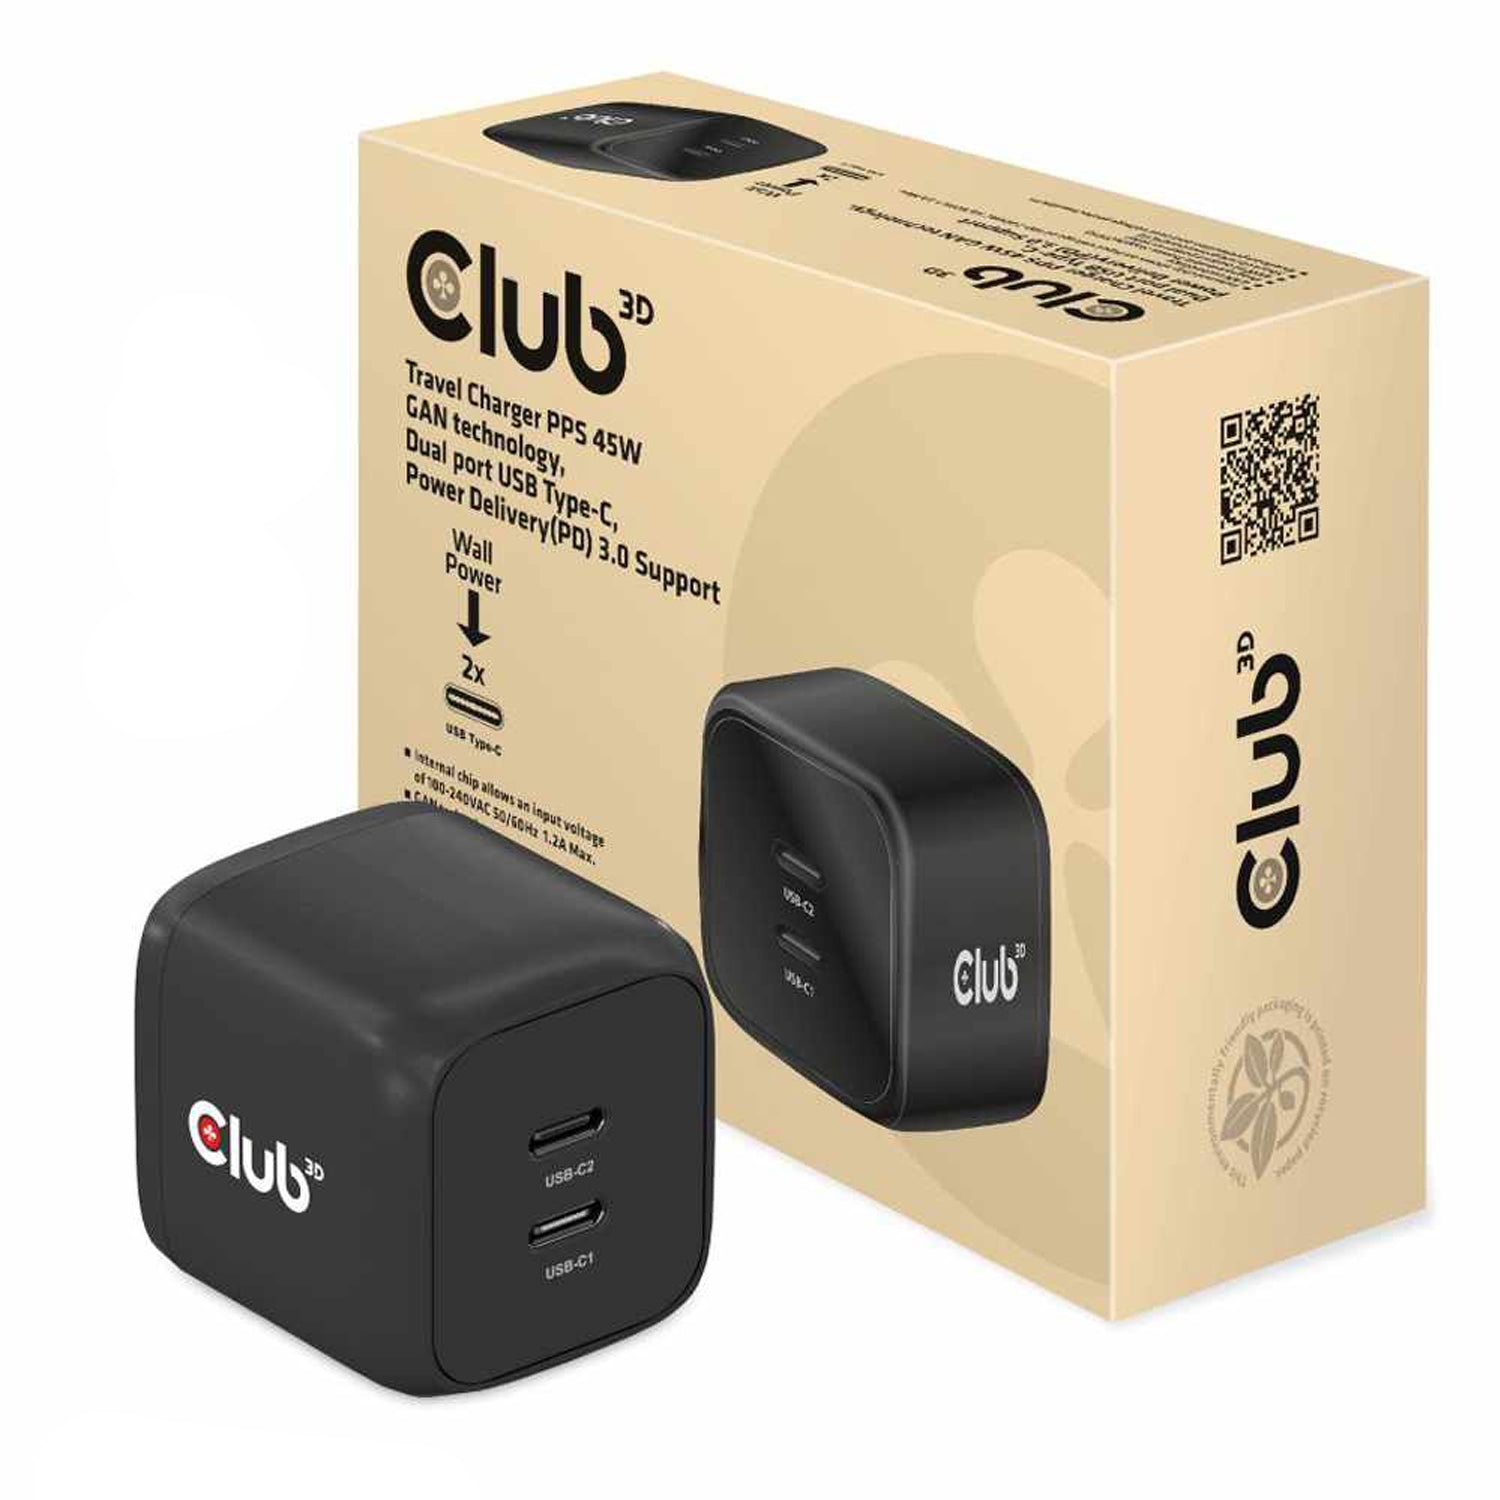 Club3D Travel Charger PPS 45W GAN Dual Port USB-C PD 3.0